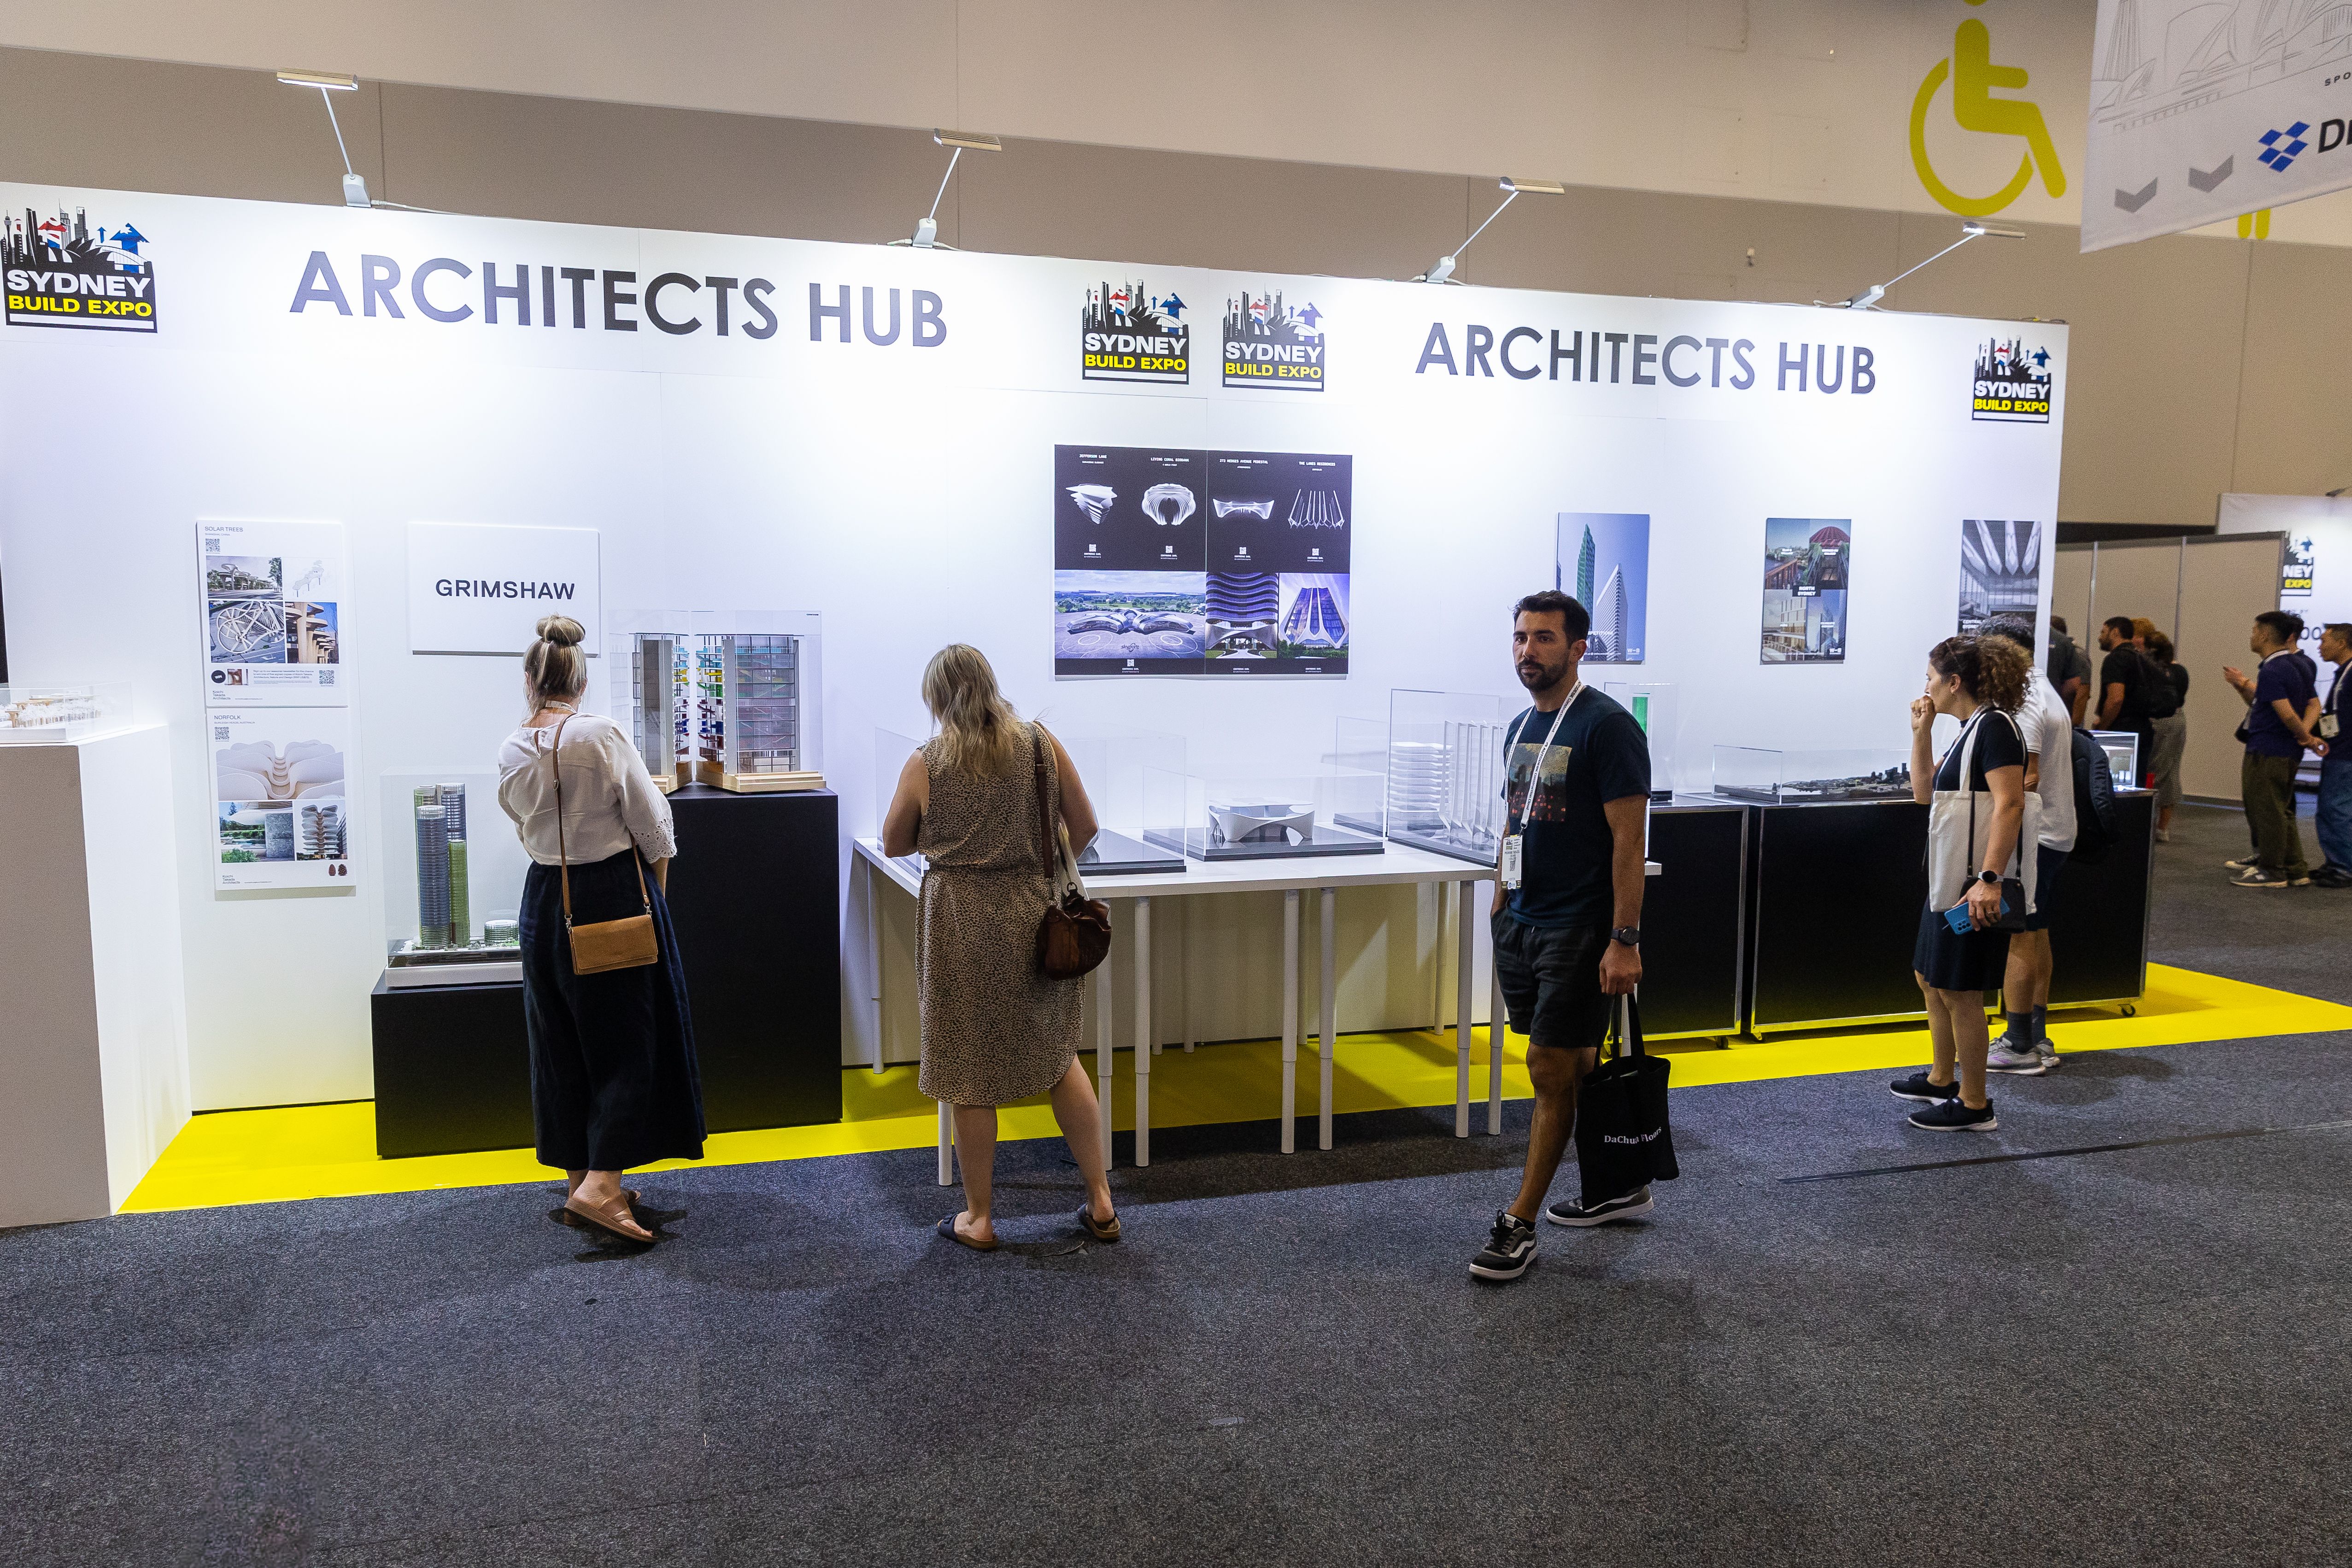 Architect's Hub